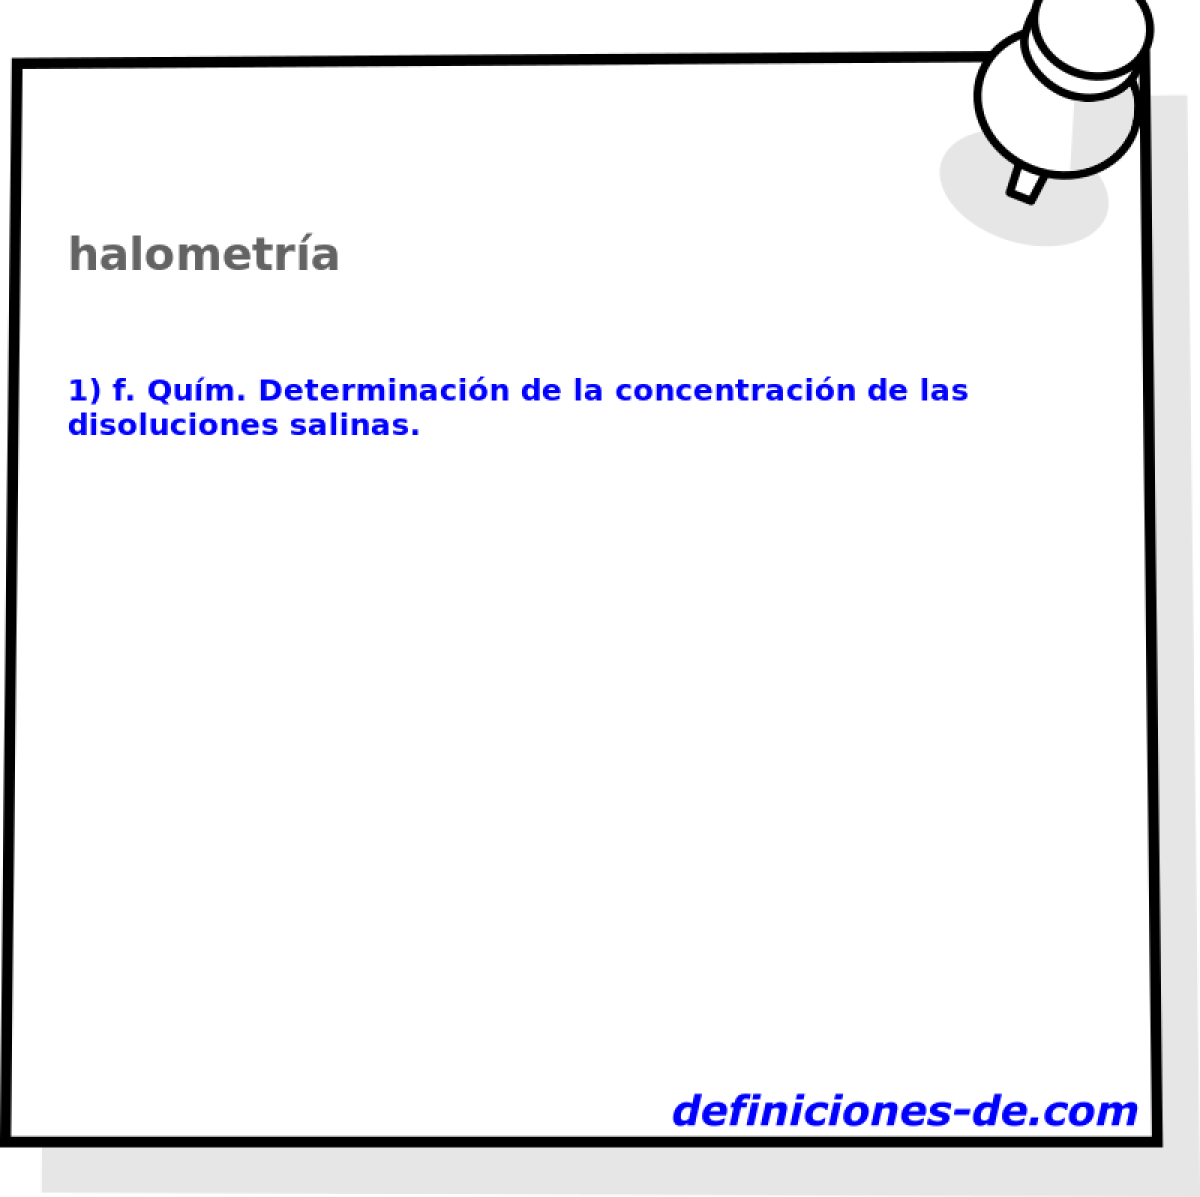 halometra 